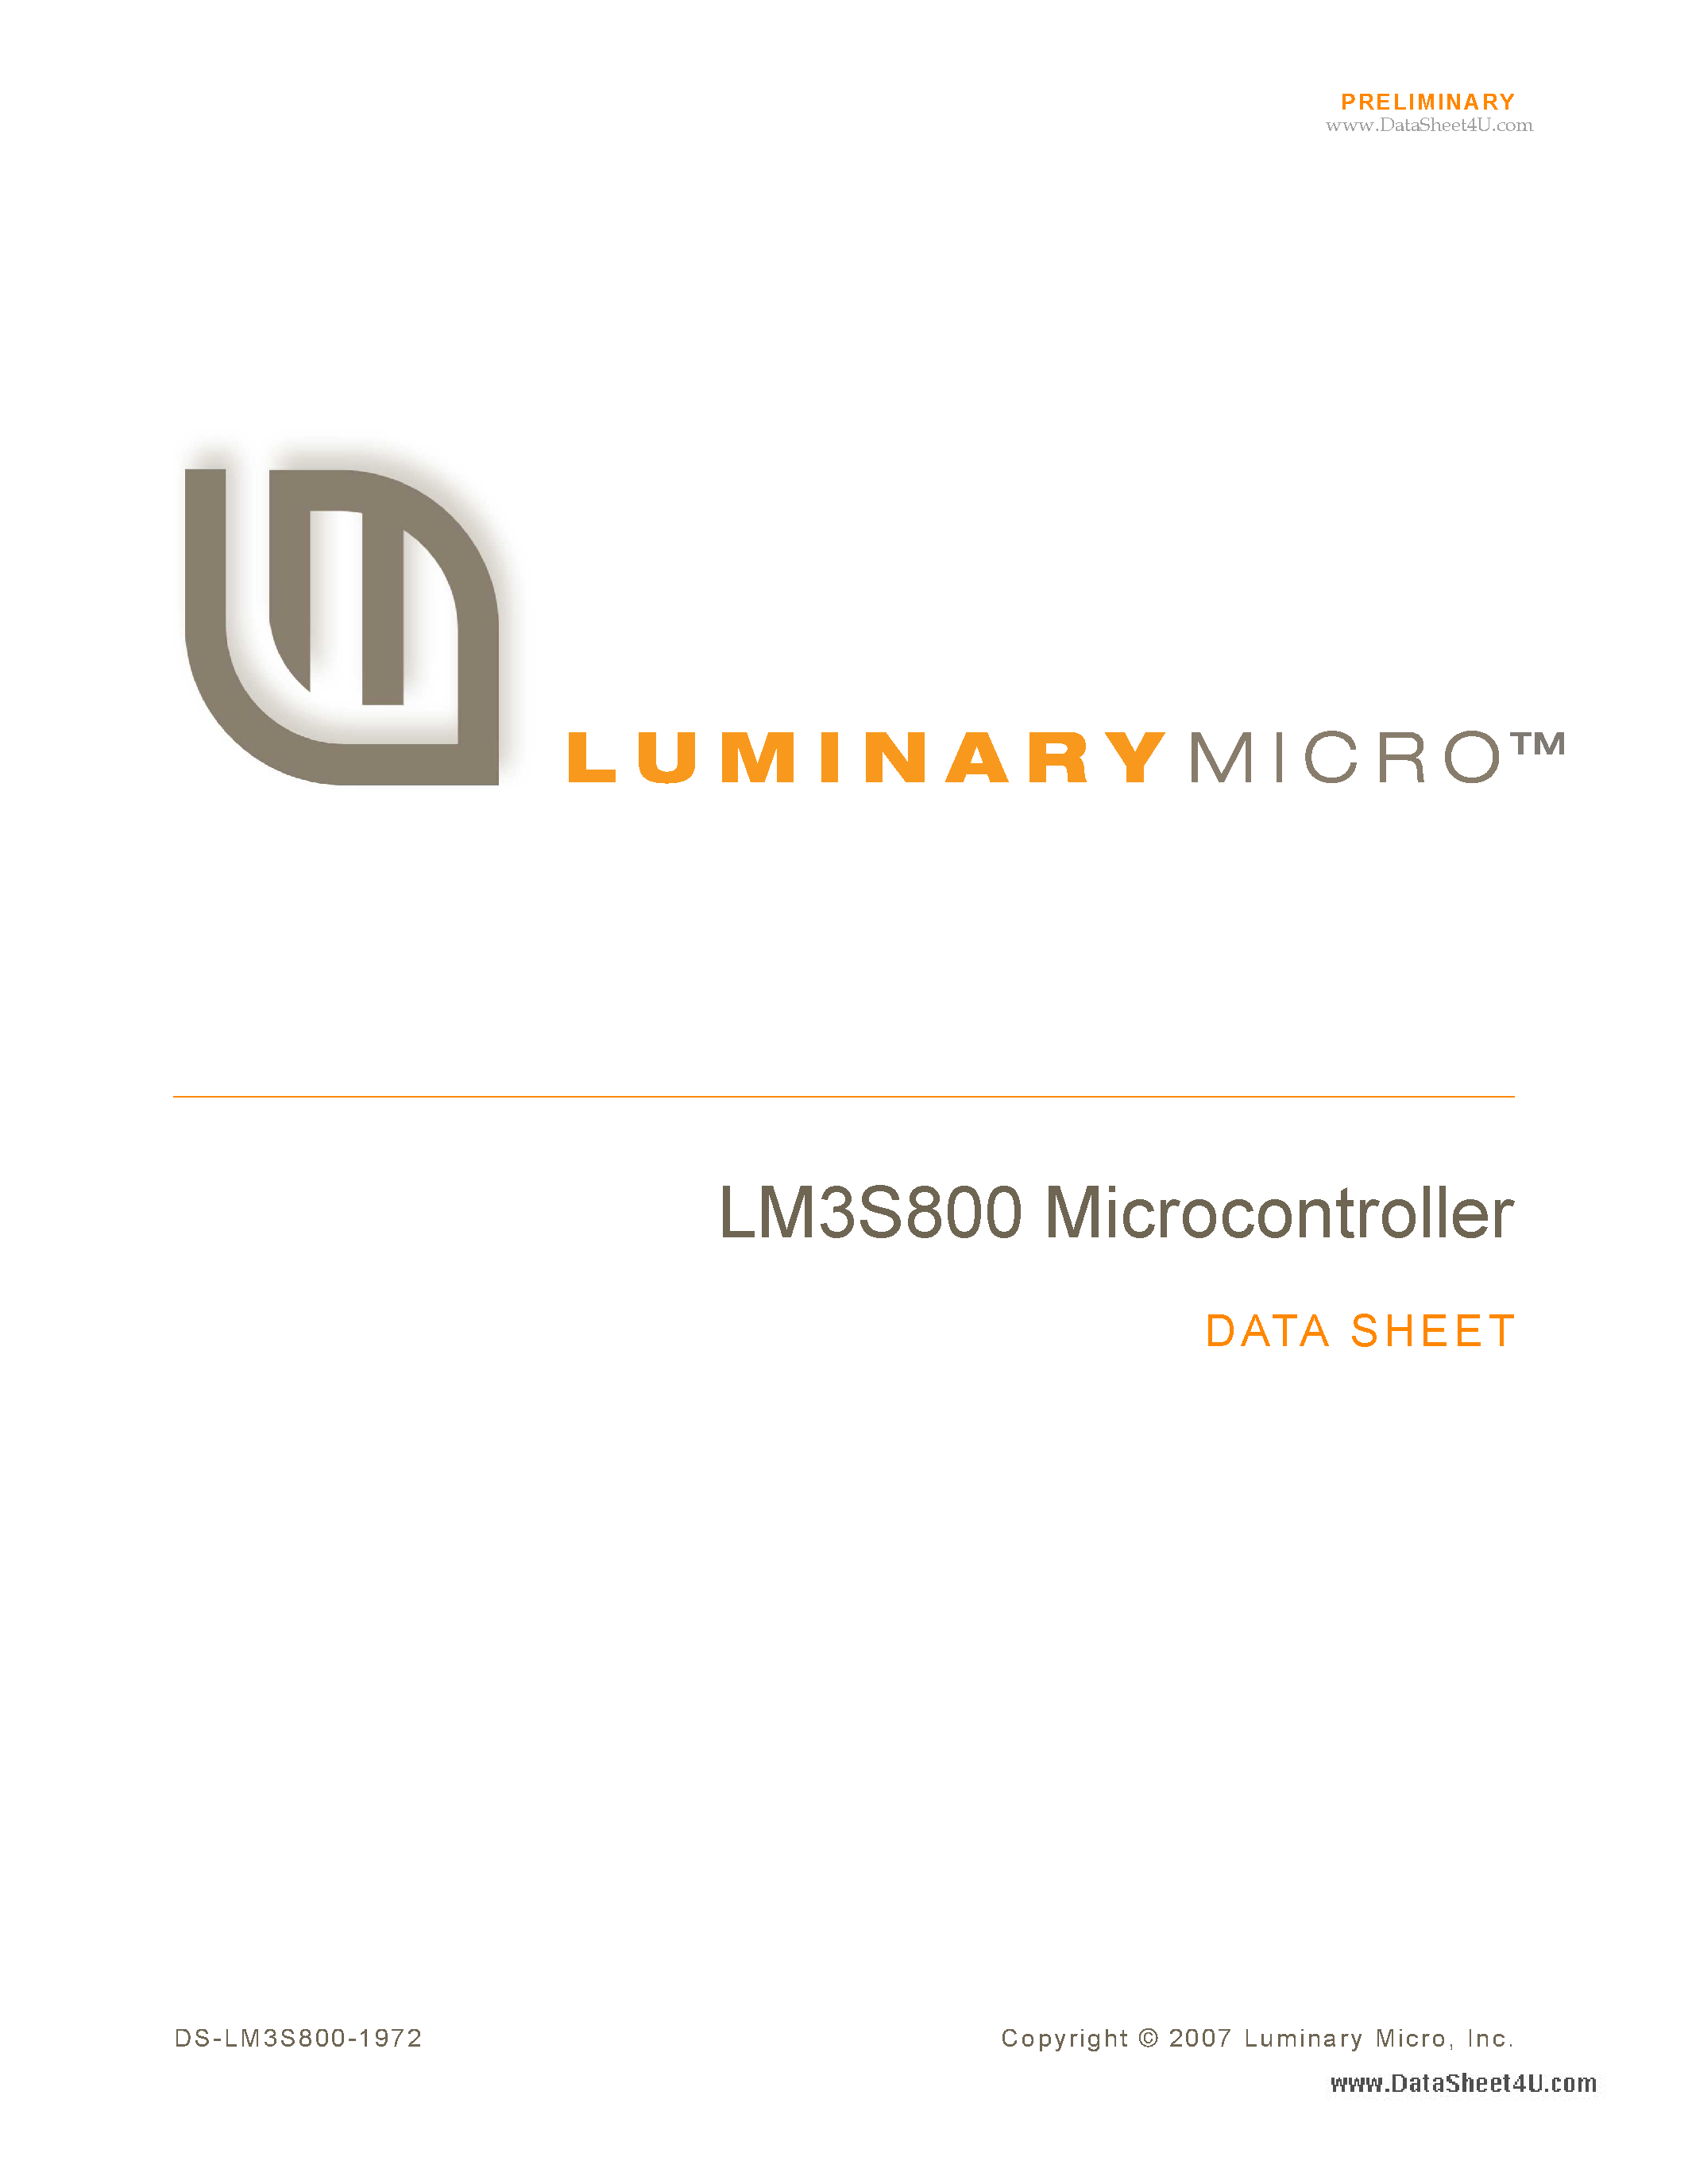 Даташит LM3S800 - Microcontroller страница 1